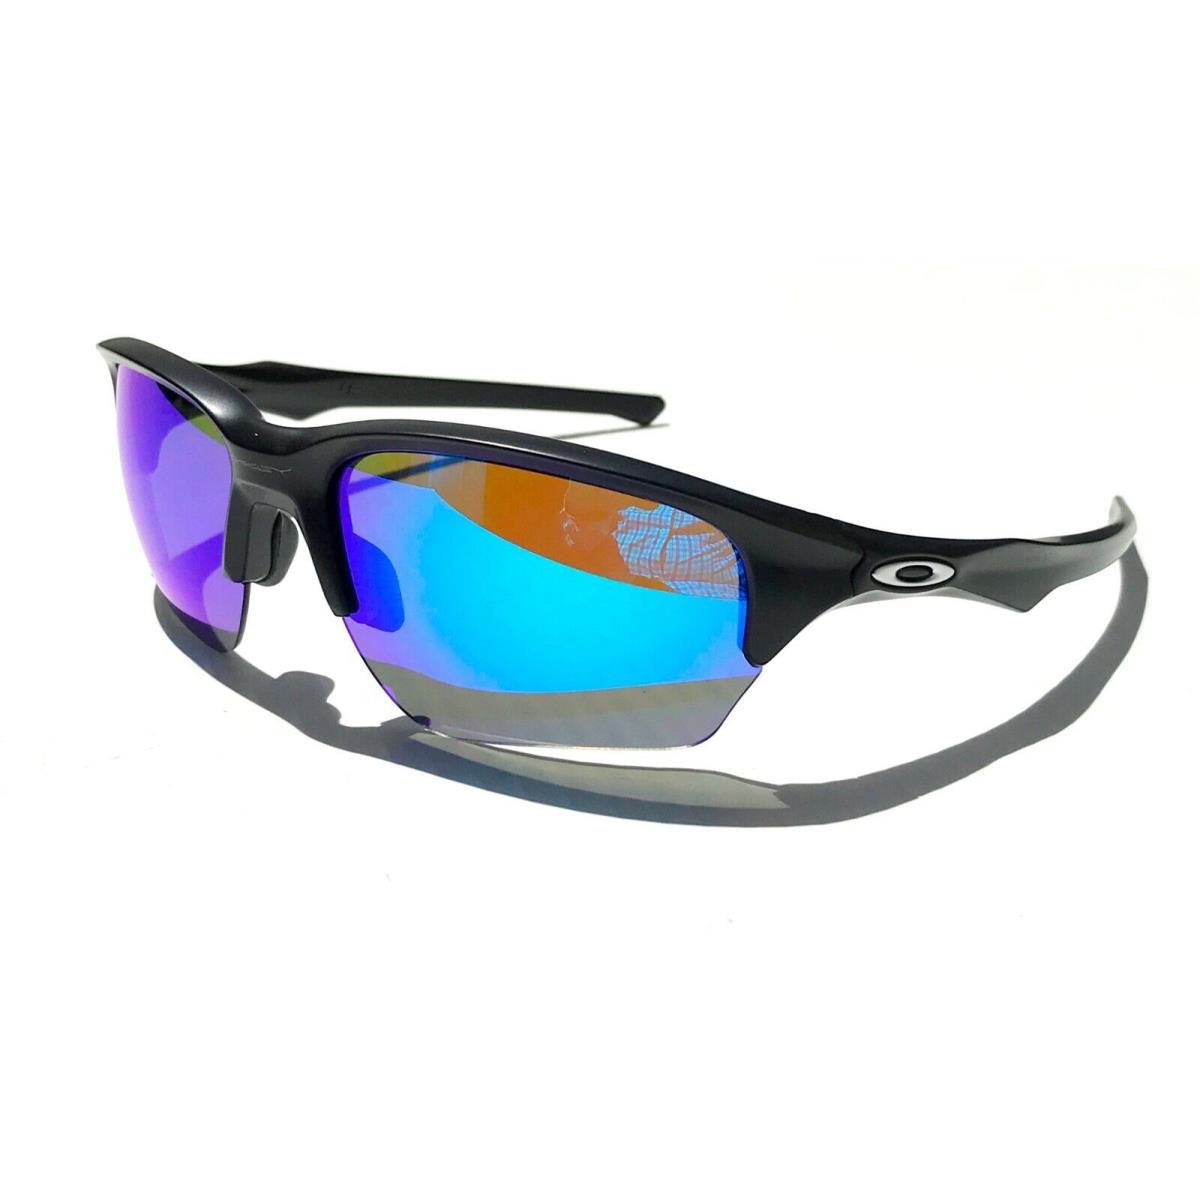 Oakley sunglasses Flak Beta - Black Satin Frame, Blue Lens 9